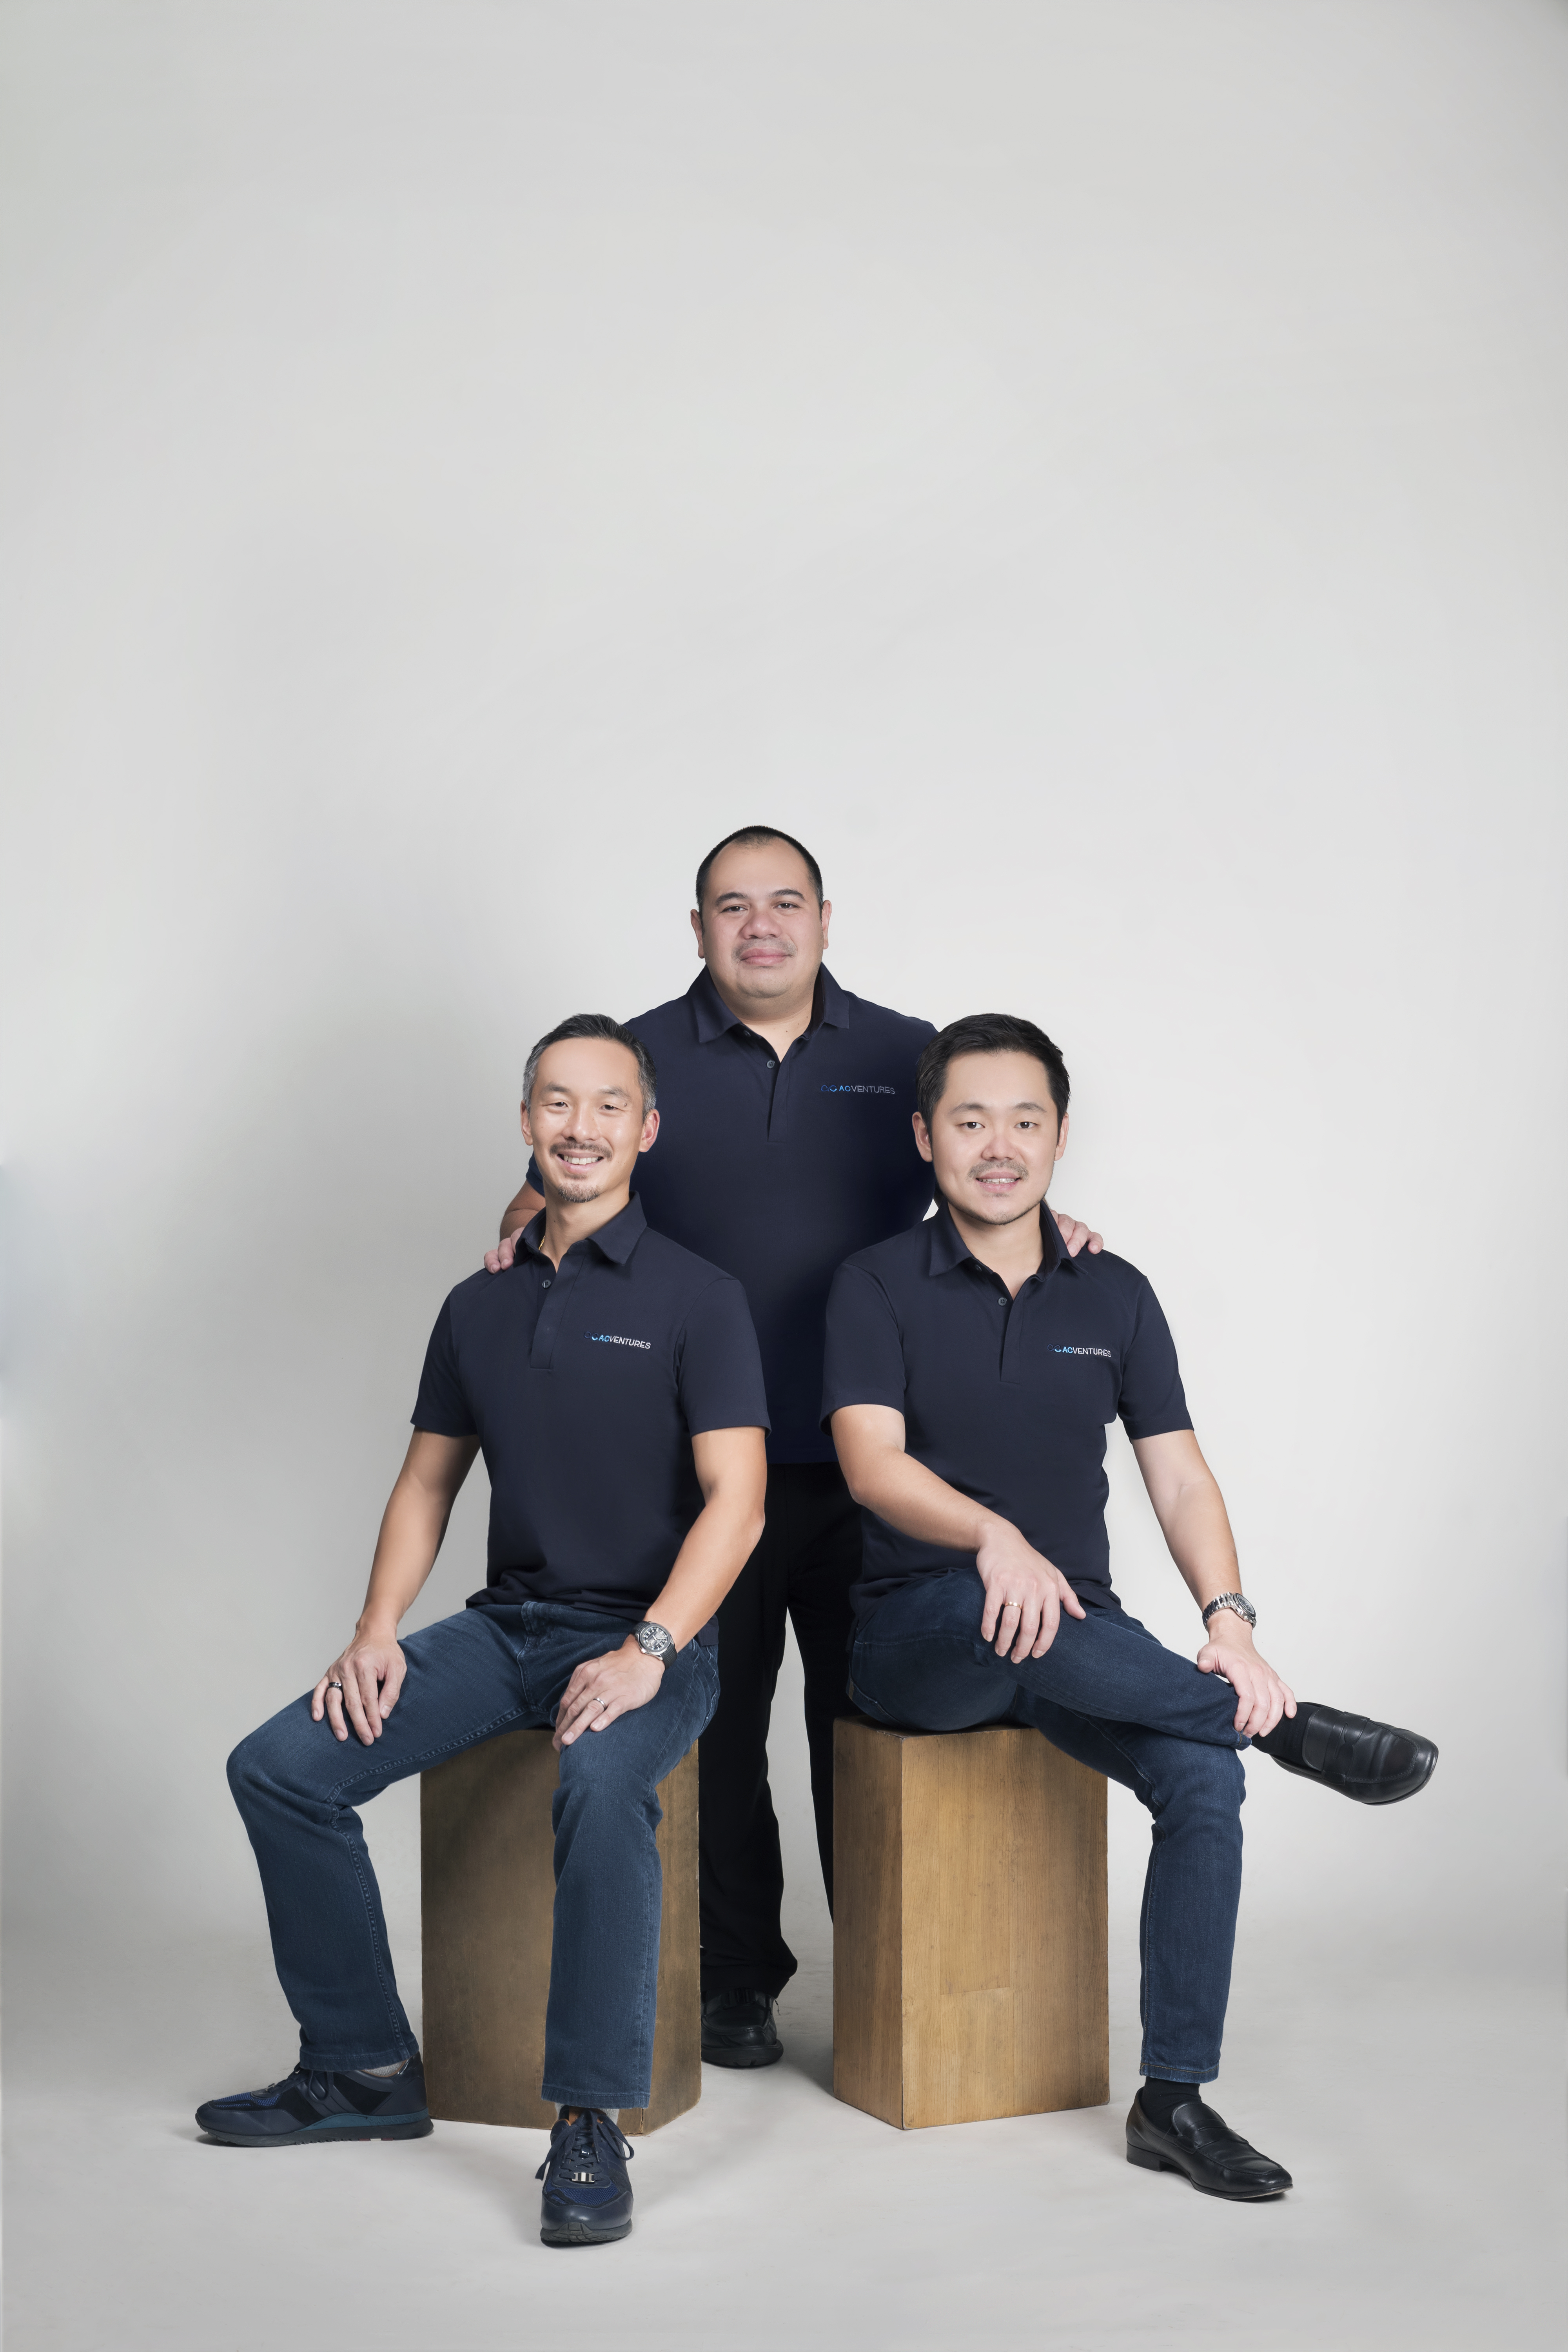 AC Ventures' founding team Adrian Li, Pandu Sjahrir and Michael Soerijadji